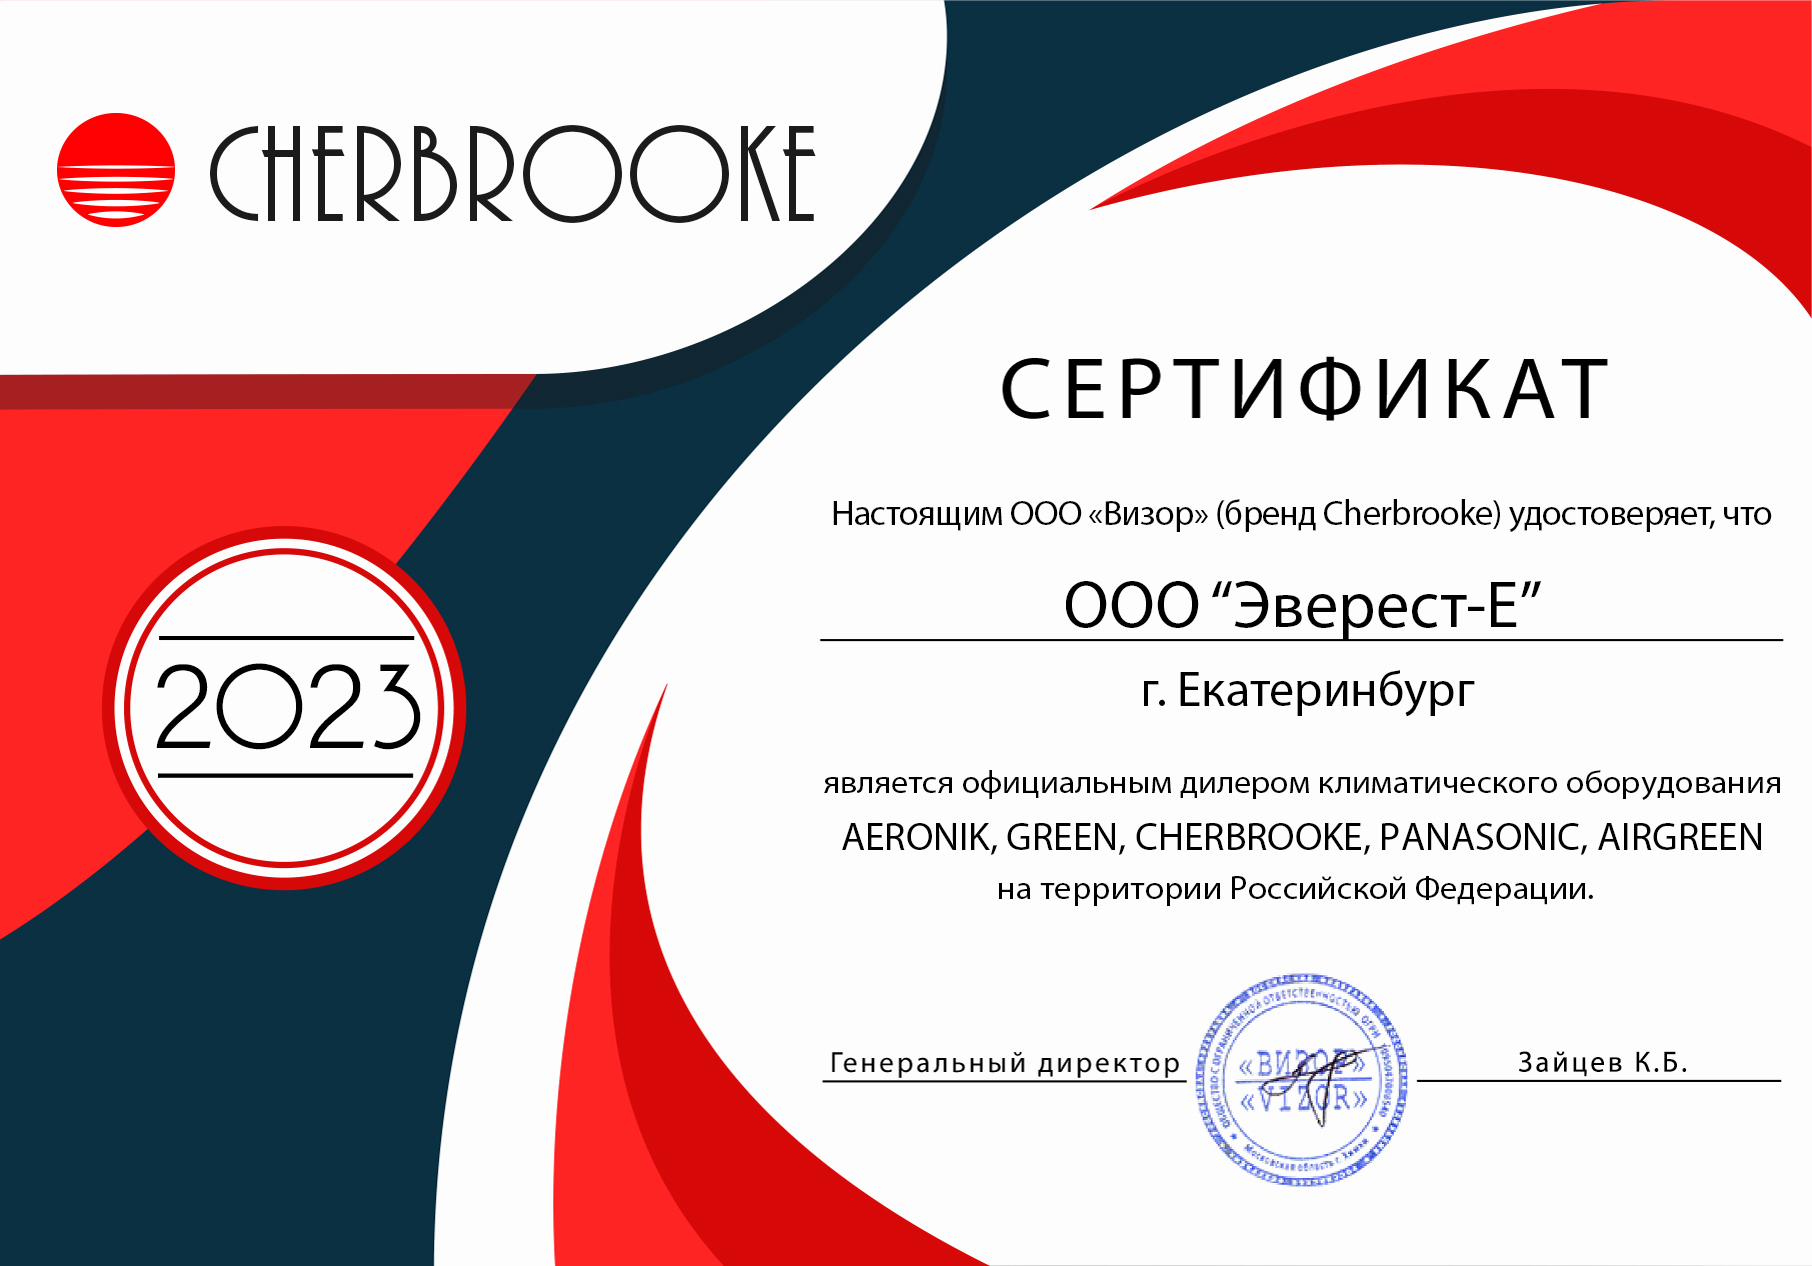 sert_cherbrooke-3 Kondicioner Panasonic CS-E12RKDW / CU-E12RKD kypit v Ekaterinbyrge v internet-magazine KlimatMarket96.ry Сертификат официального дилера